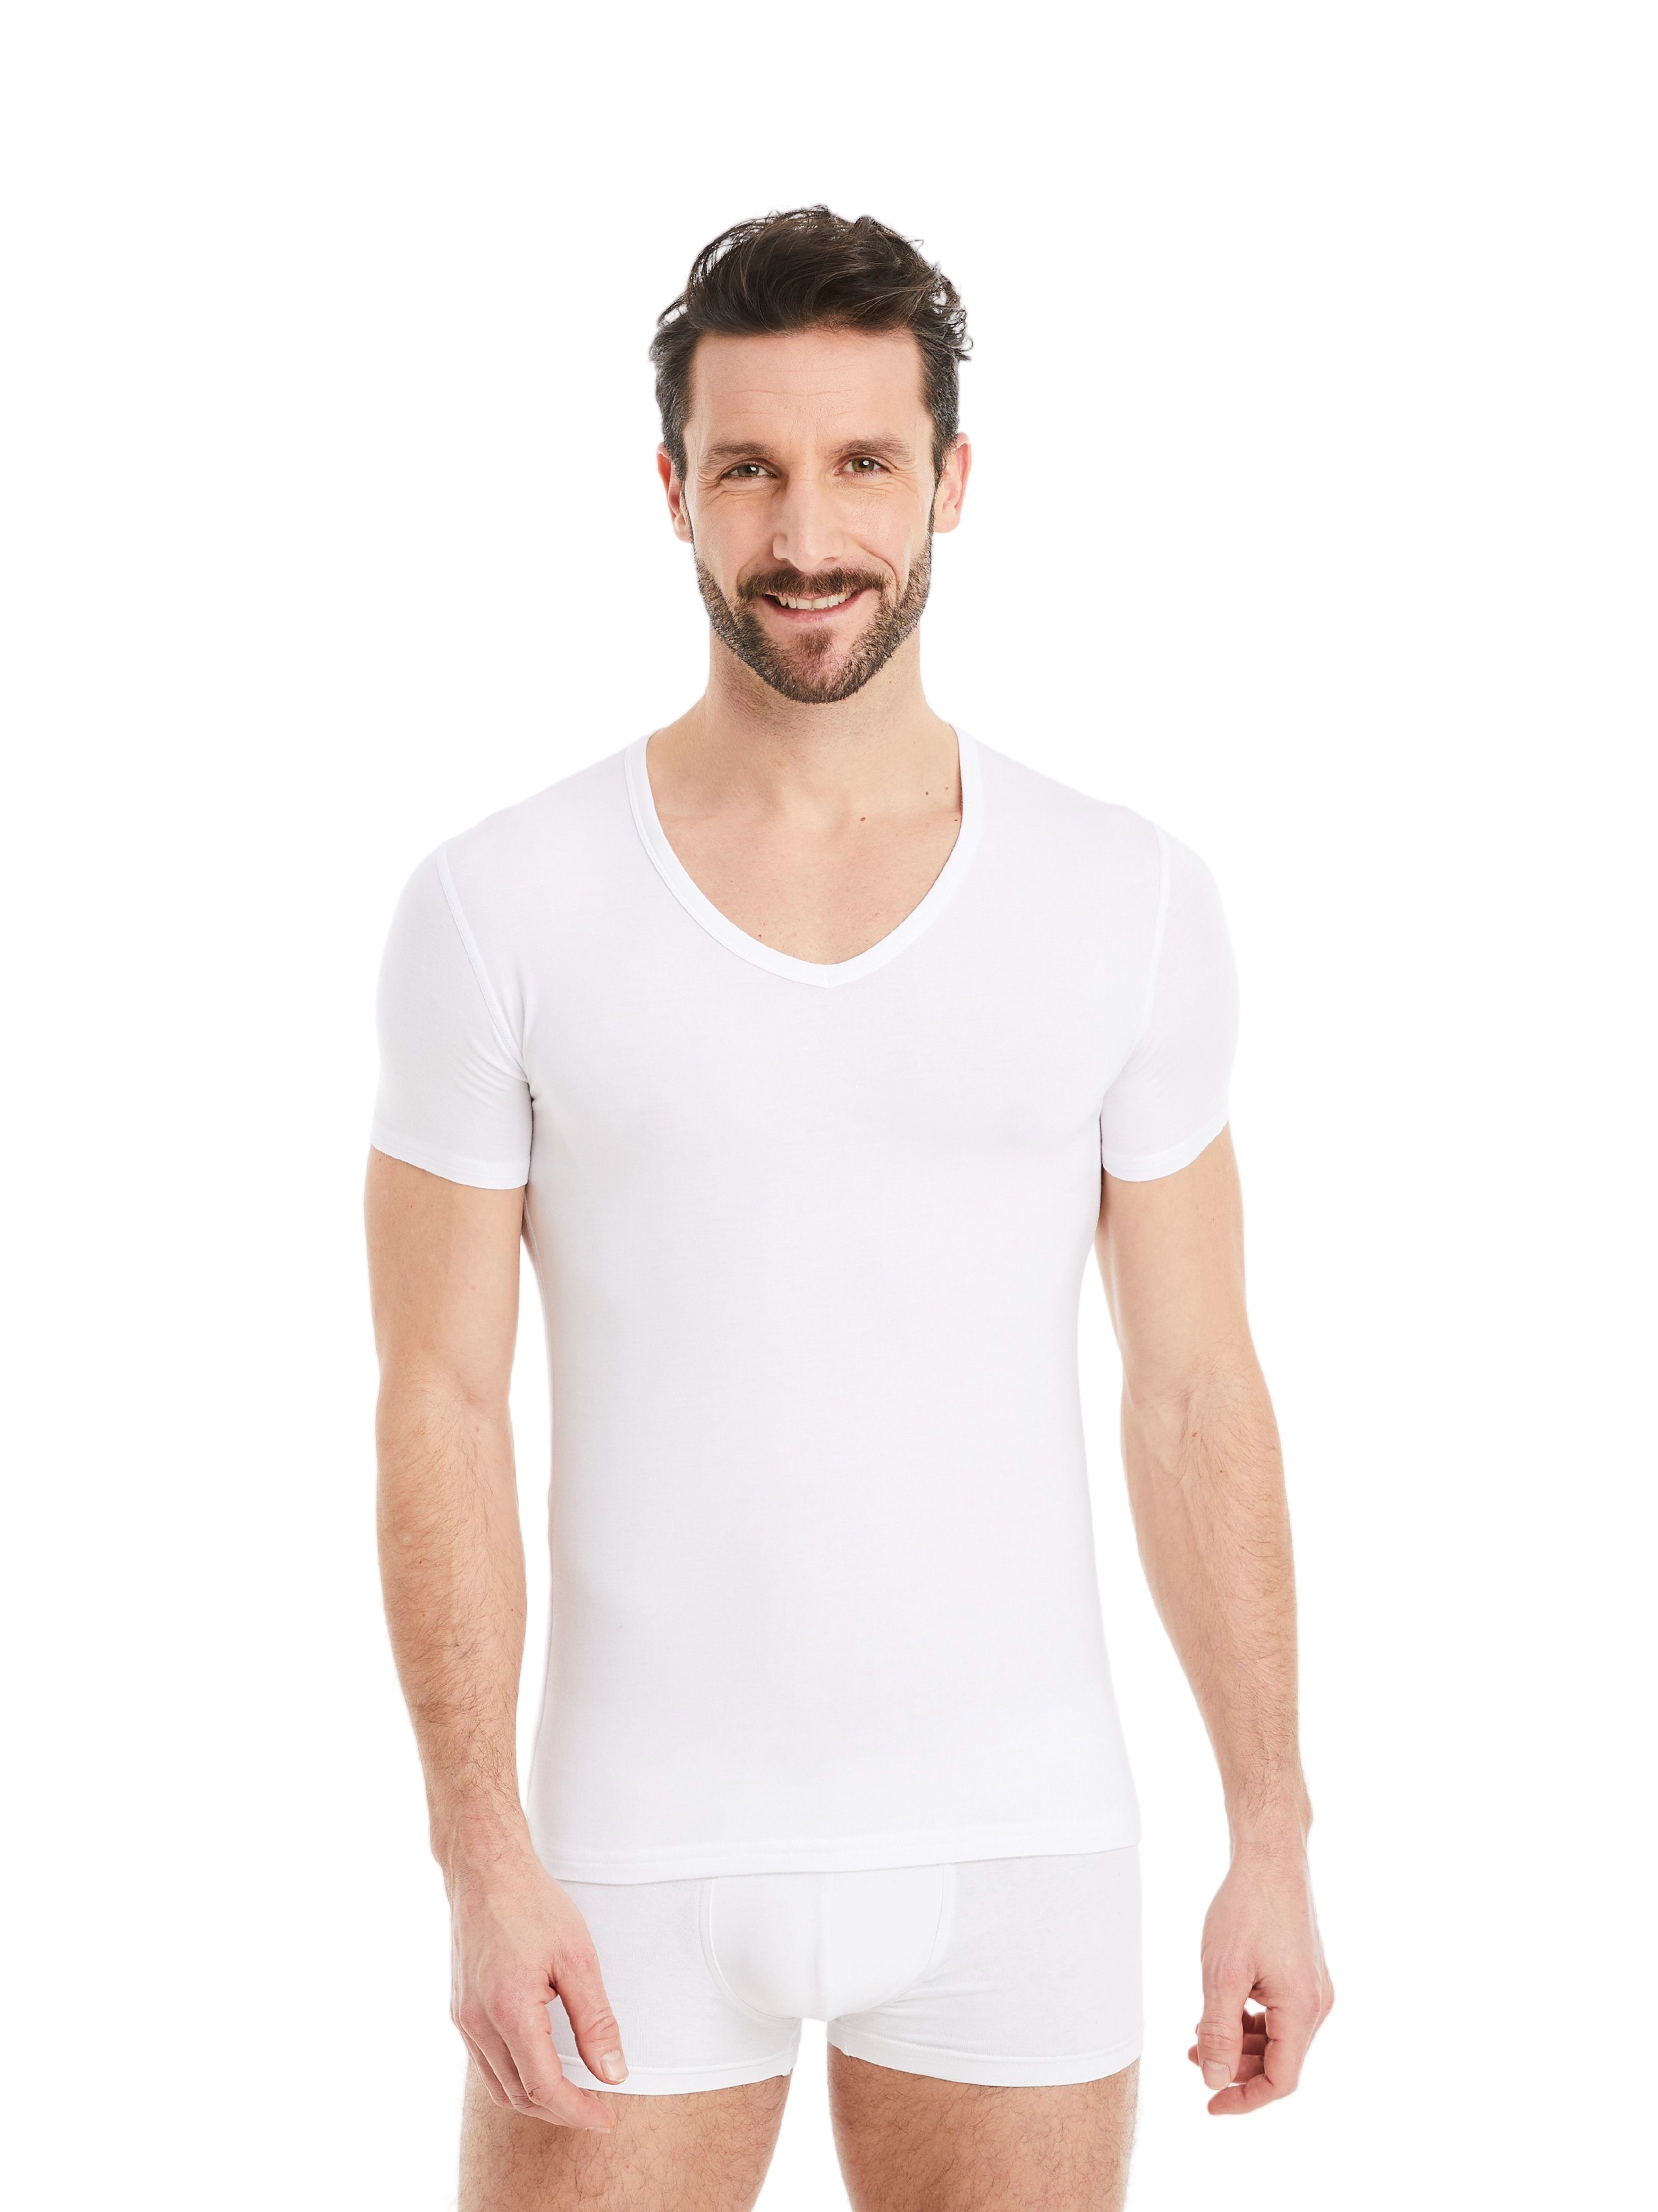 FINN Design Unterhemd Business Unterhemd Kurzarm V-Ausschnitt Herren feiner Micro-Modal Stoff, maximaler Tragekomfort Weiß